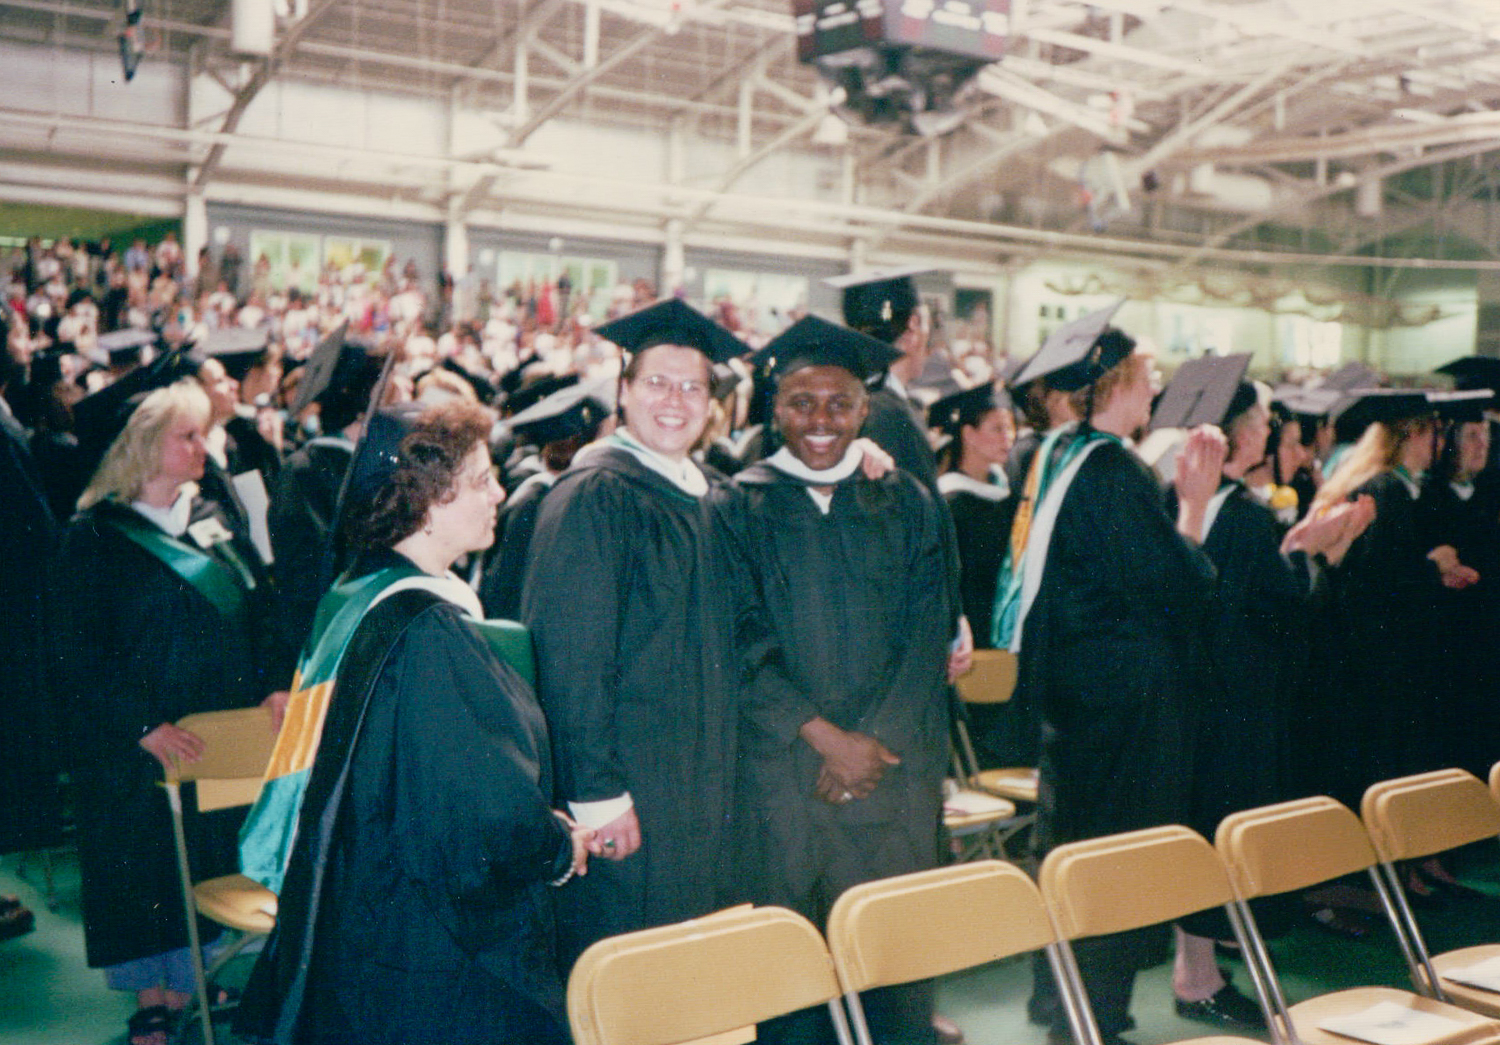 Martin Pierre at Lesley graduation